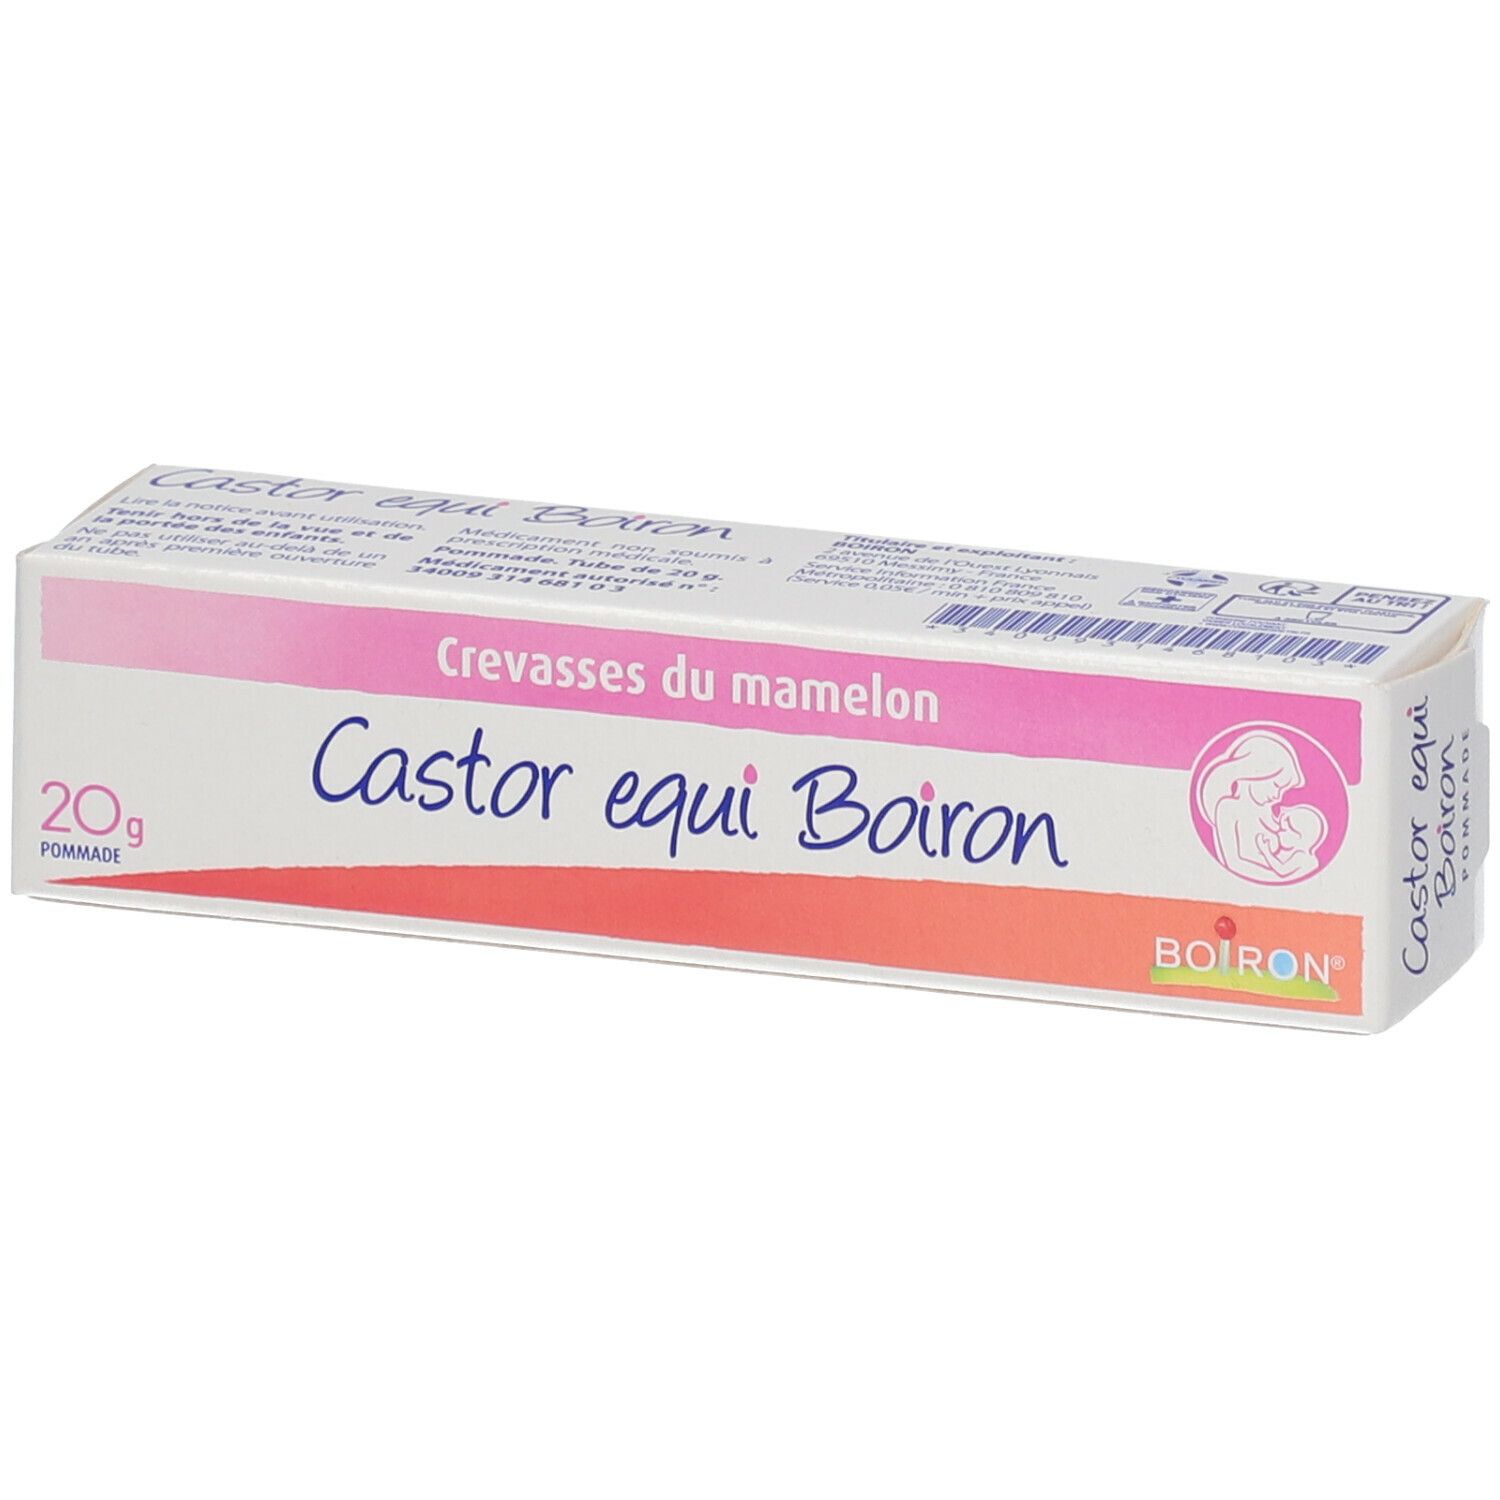 Boiron® Castor Equi Boiron Pommade